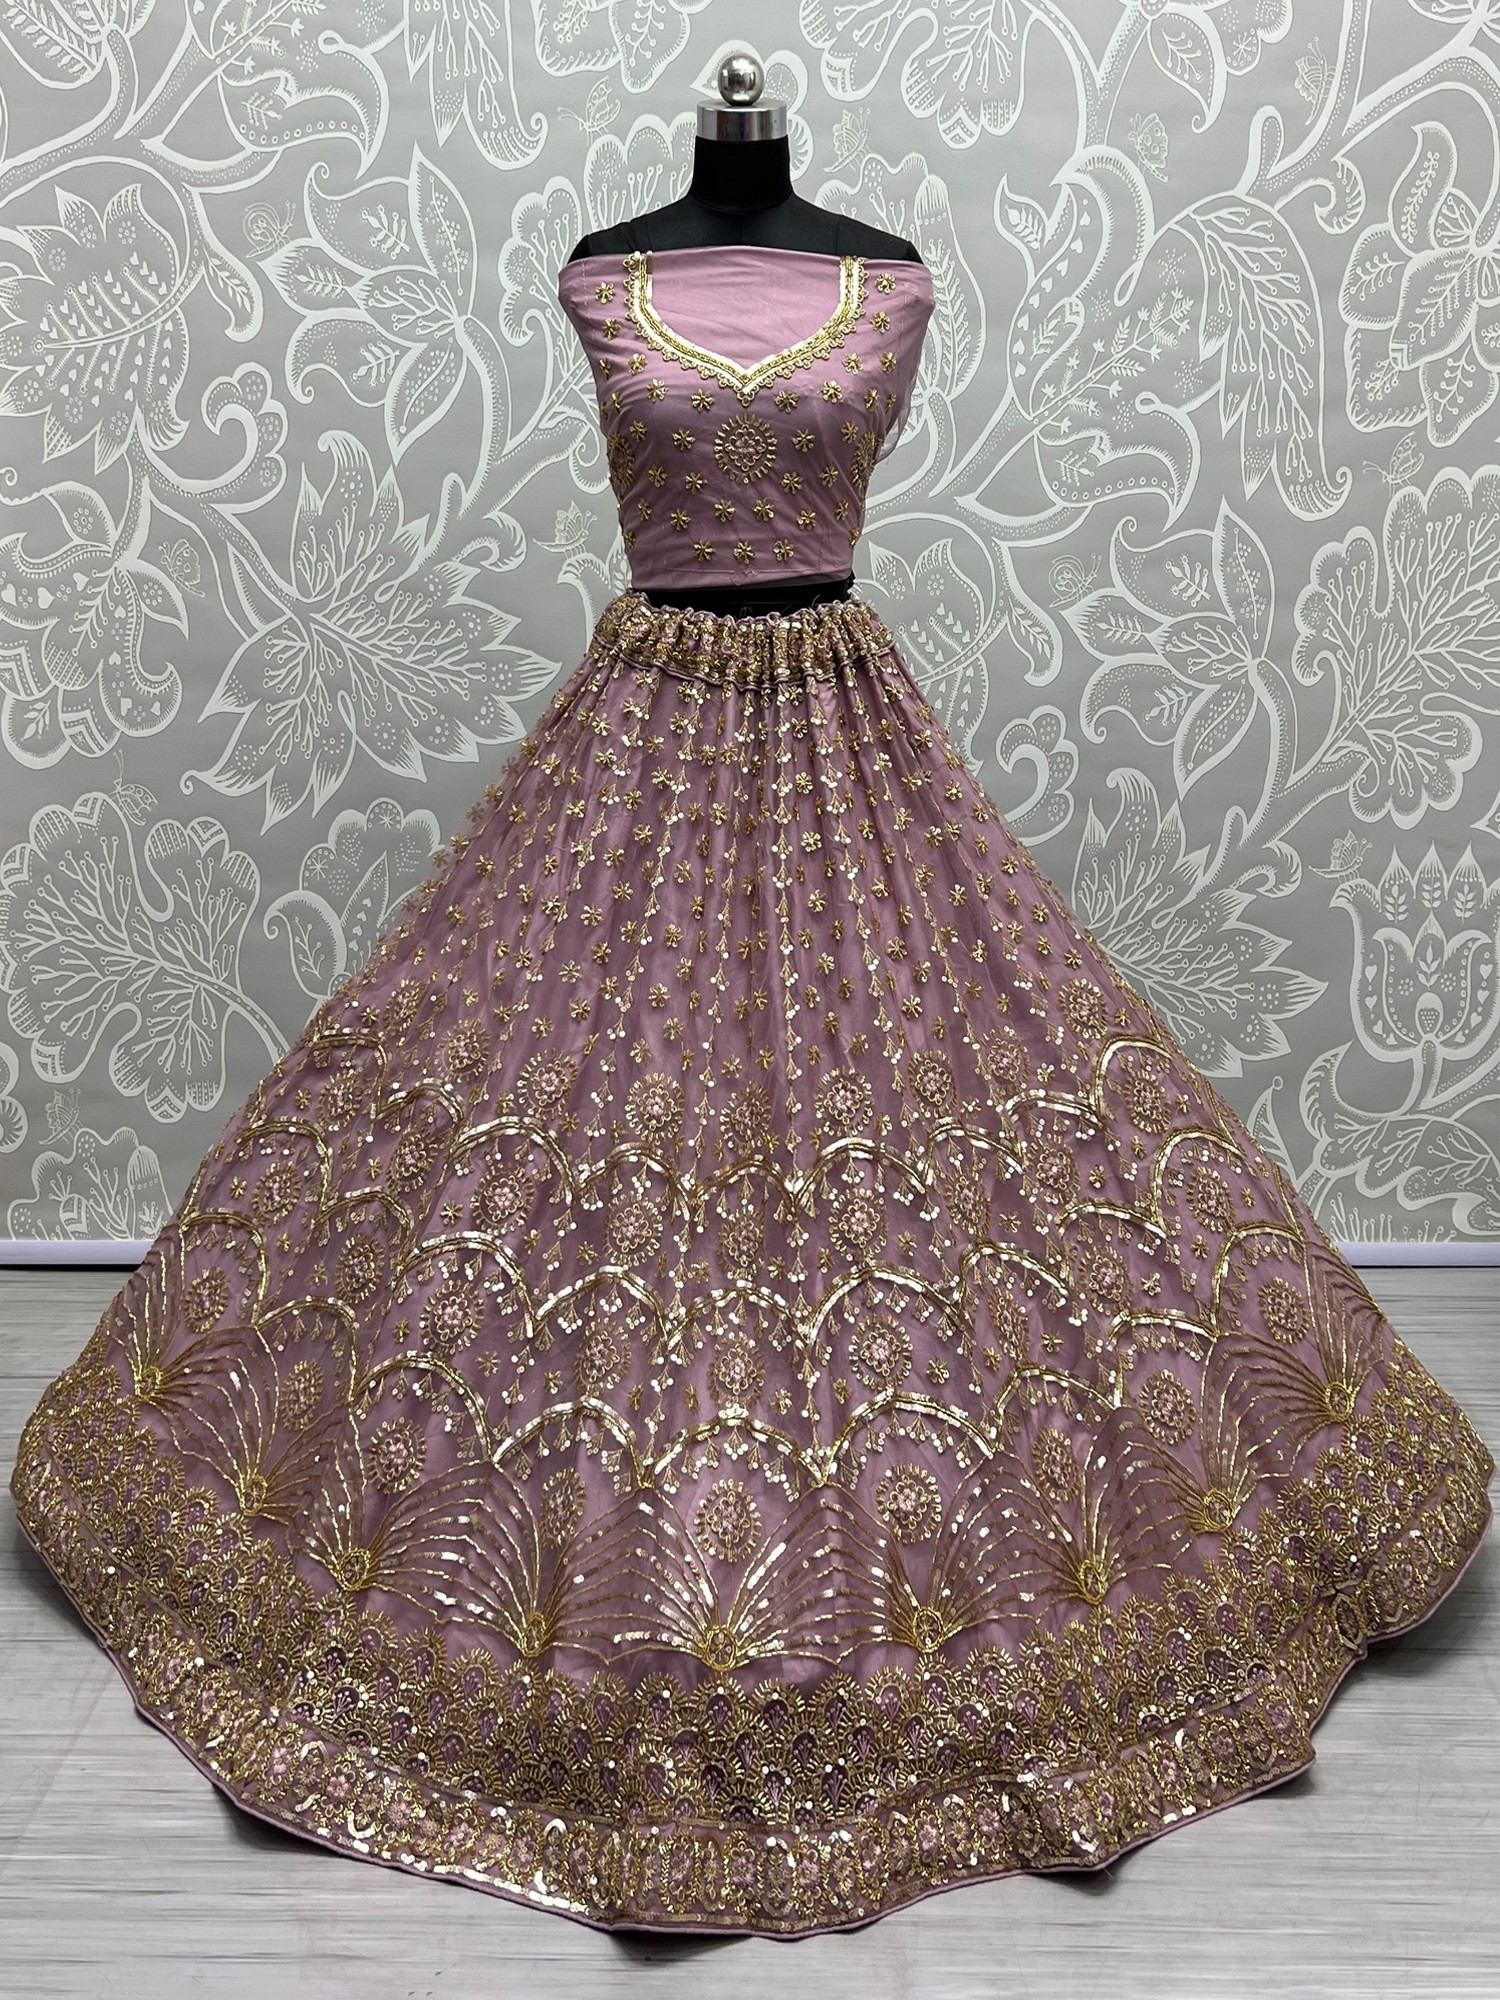 Crop Top Lehenga Indian Wedding Dress Bollywood Style onion color pyazi  color | eBay